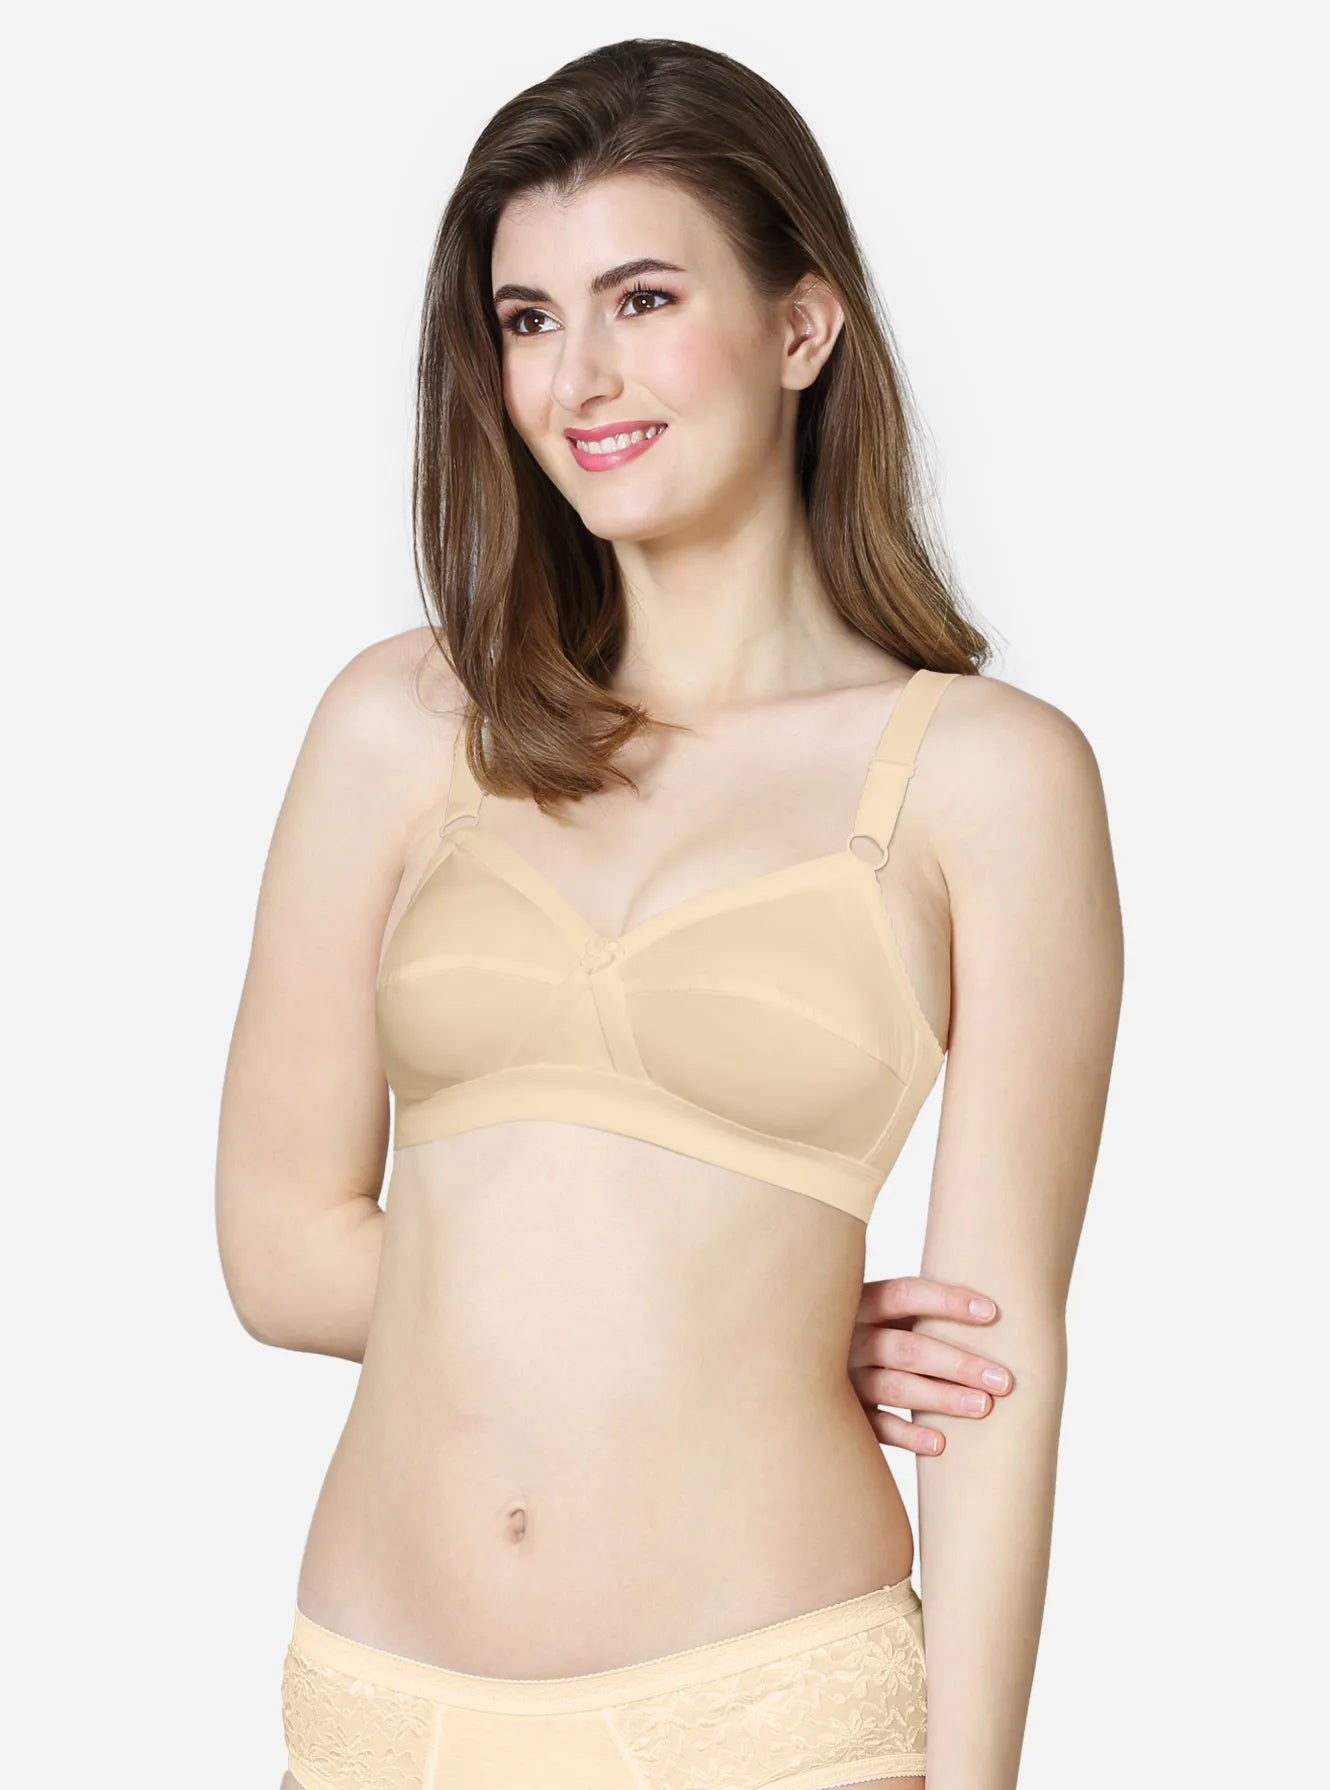 VSTAR JOY Full coverage plus size cross over bra over bust bra, plus size bra - bare essentials